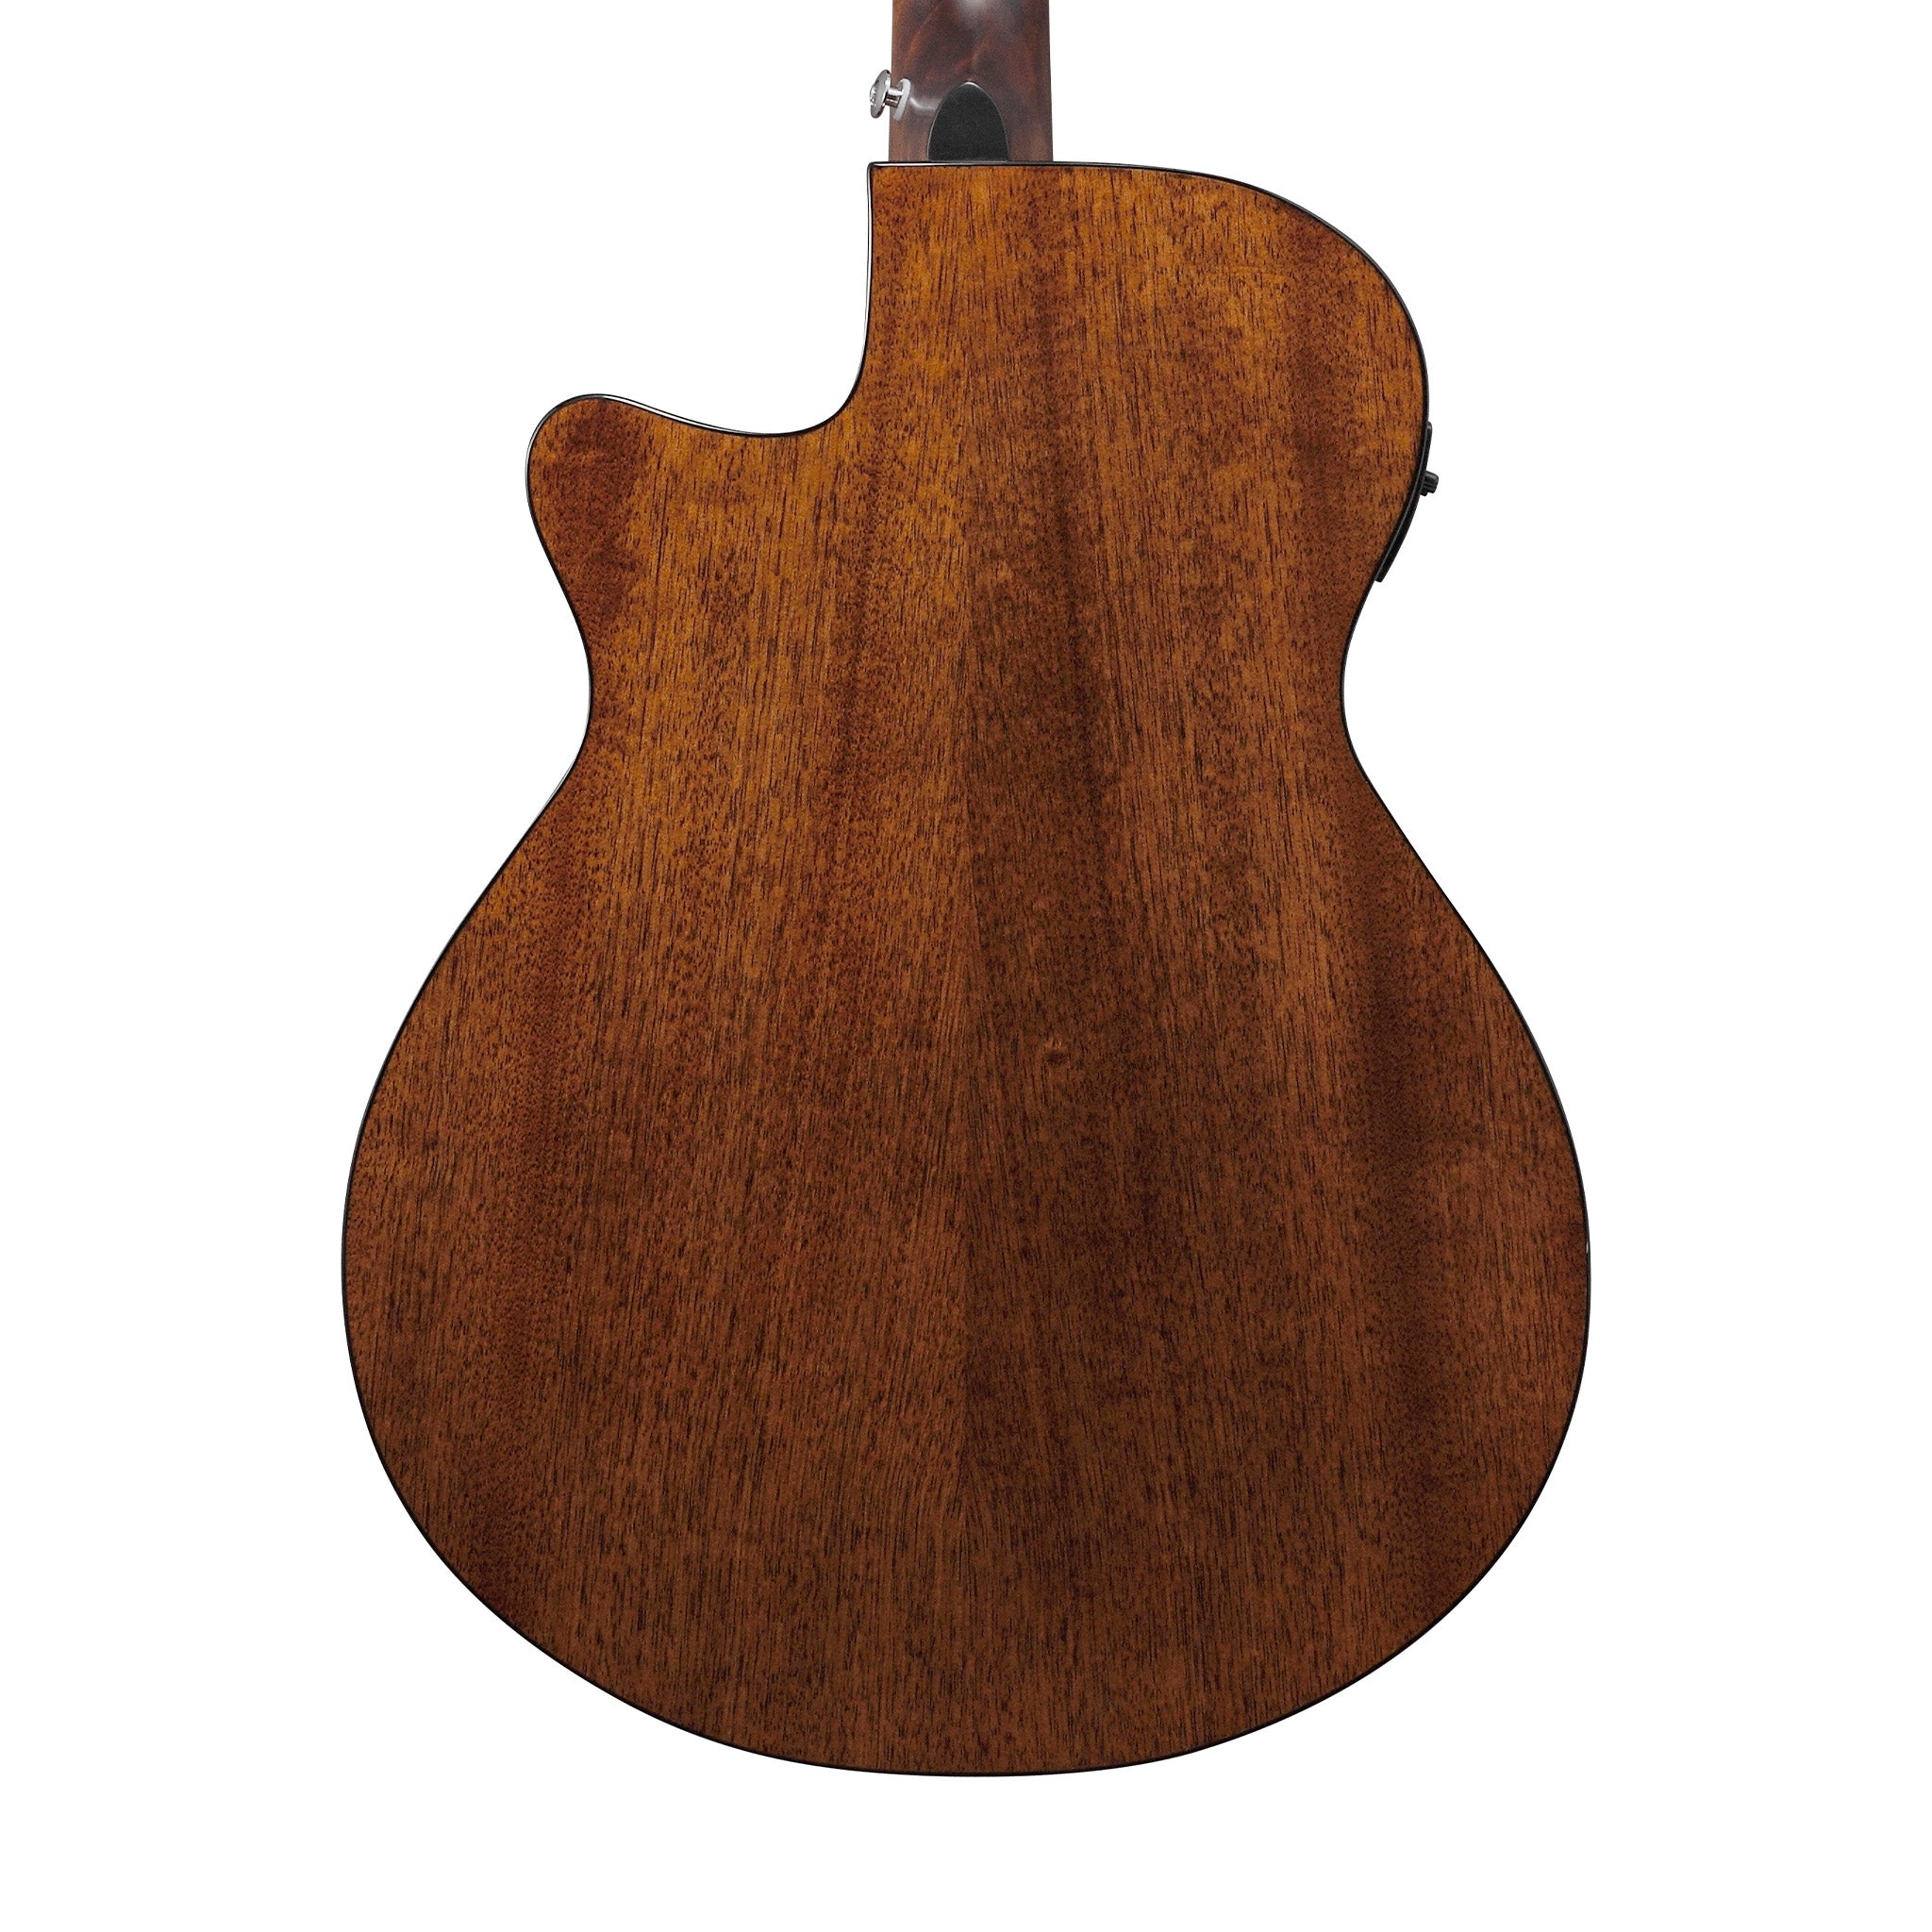 Ibanez AEG61 Acoustic Guitar - Natural Mahogany High Gloss (AEG61-NMH)